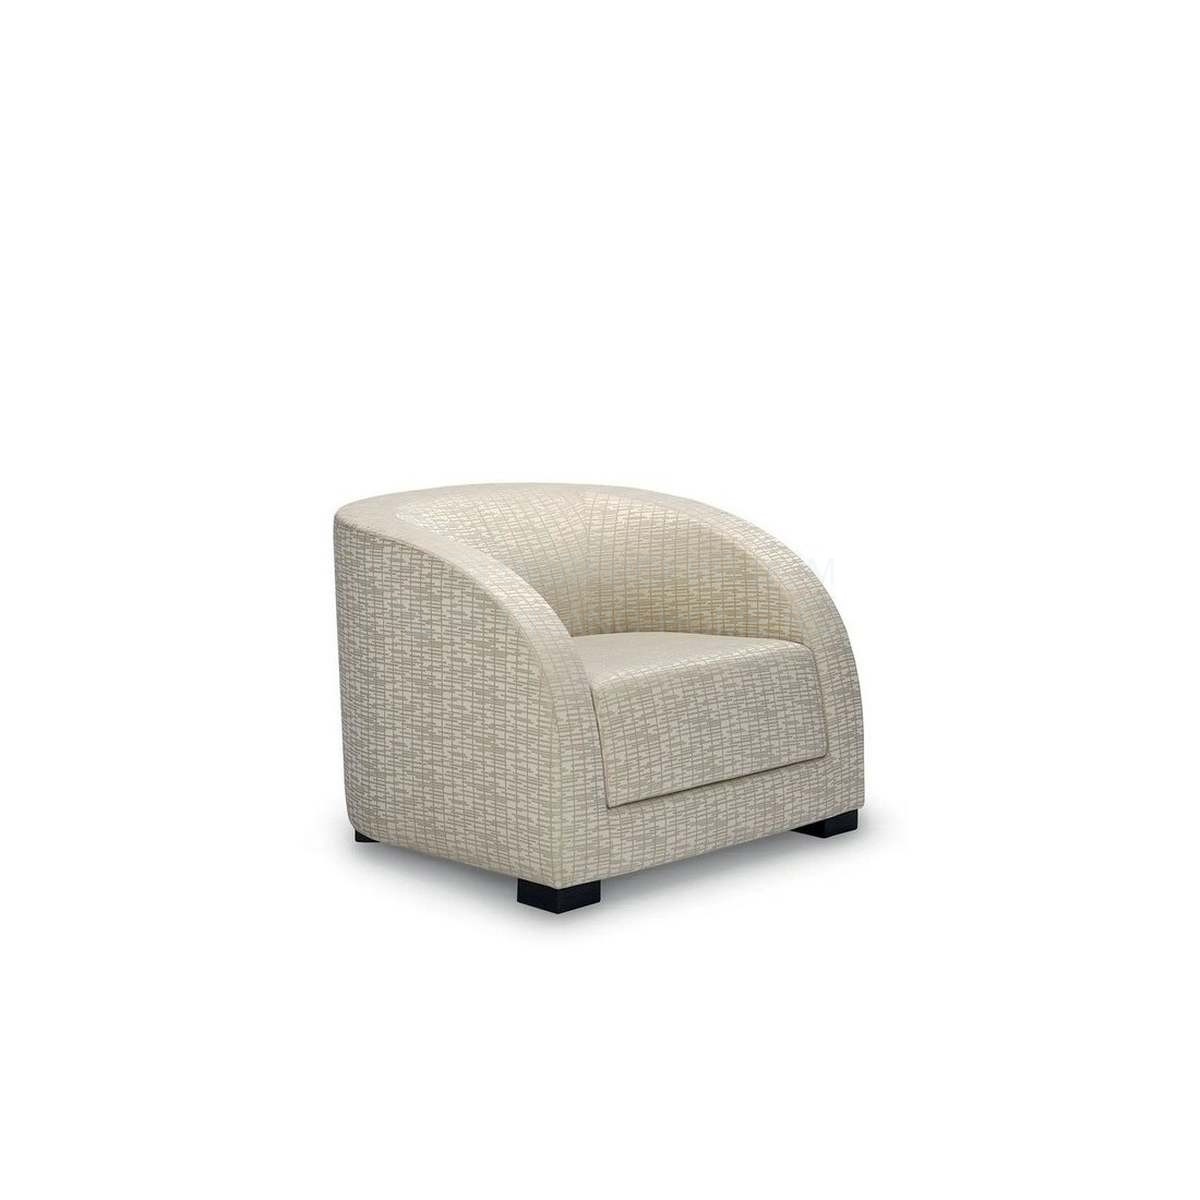 Круглое кресло Essex armchair из Италии фабрики ARMANI CASA